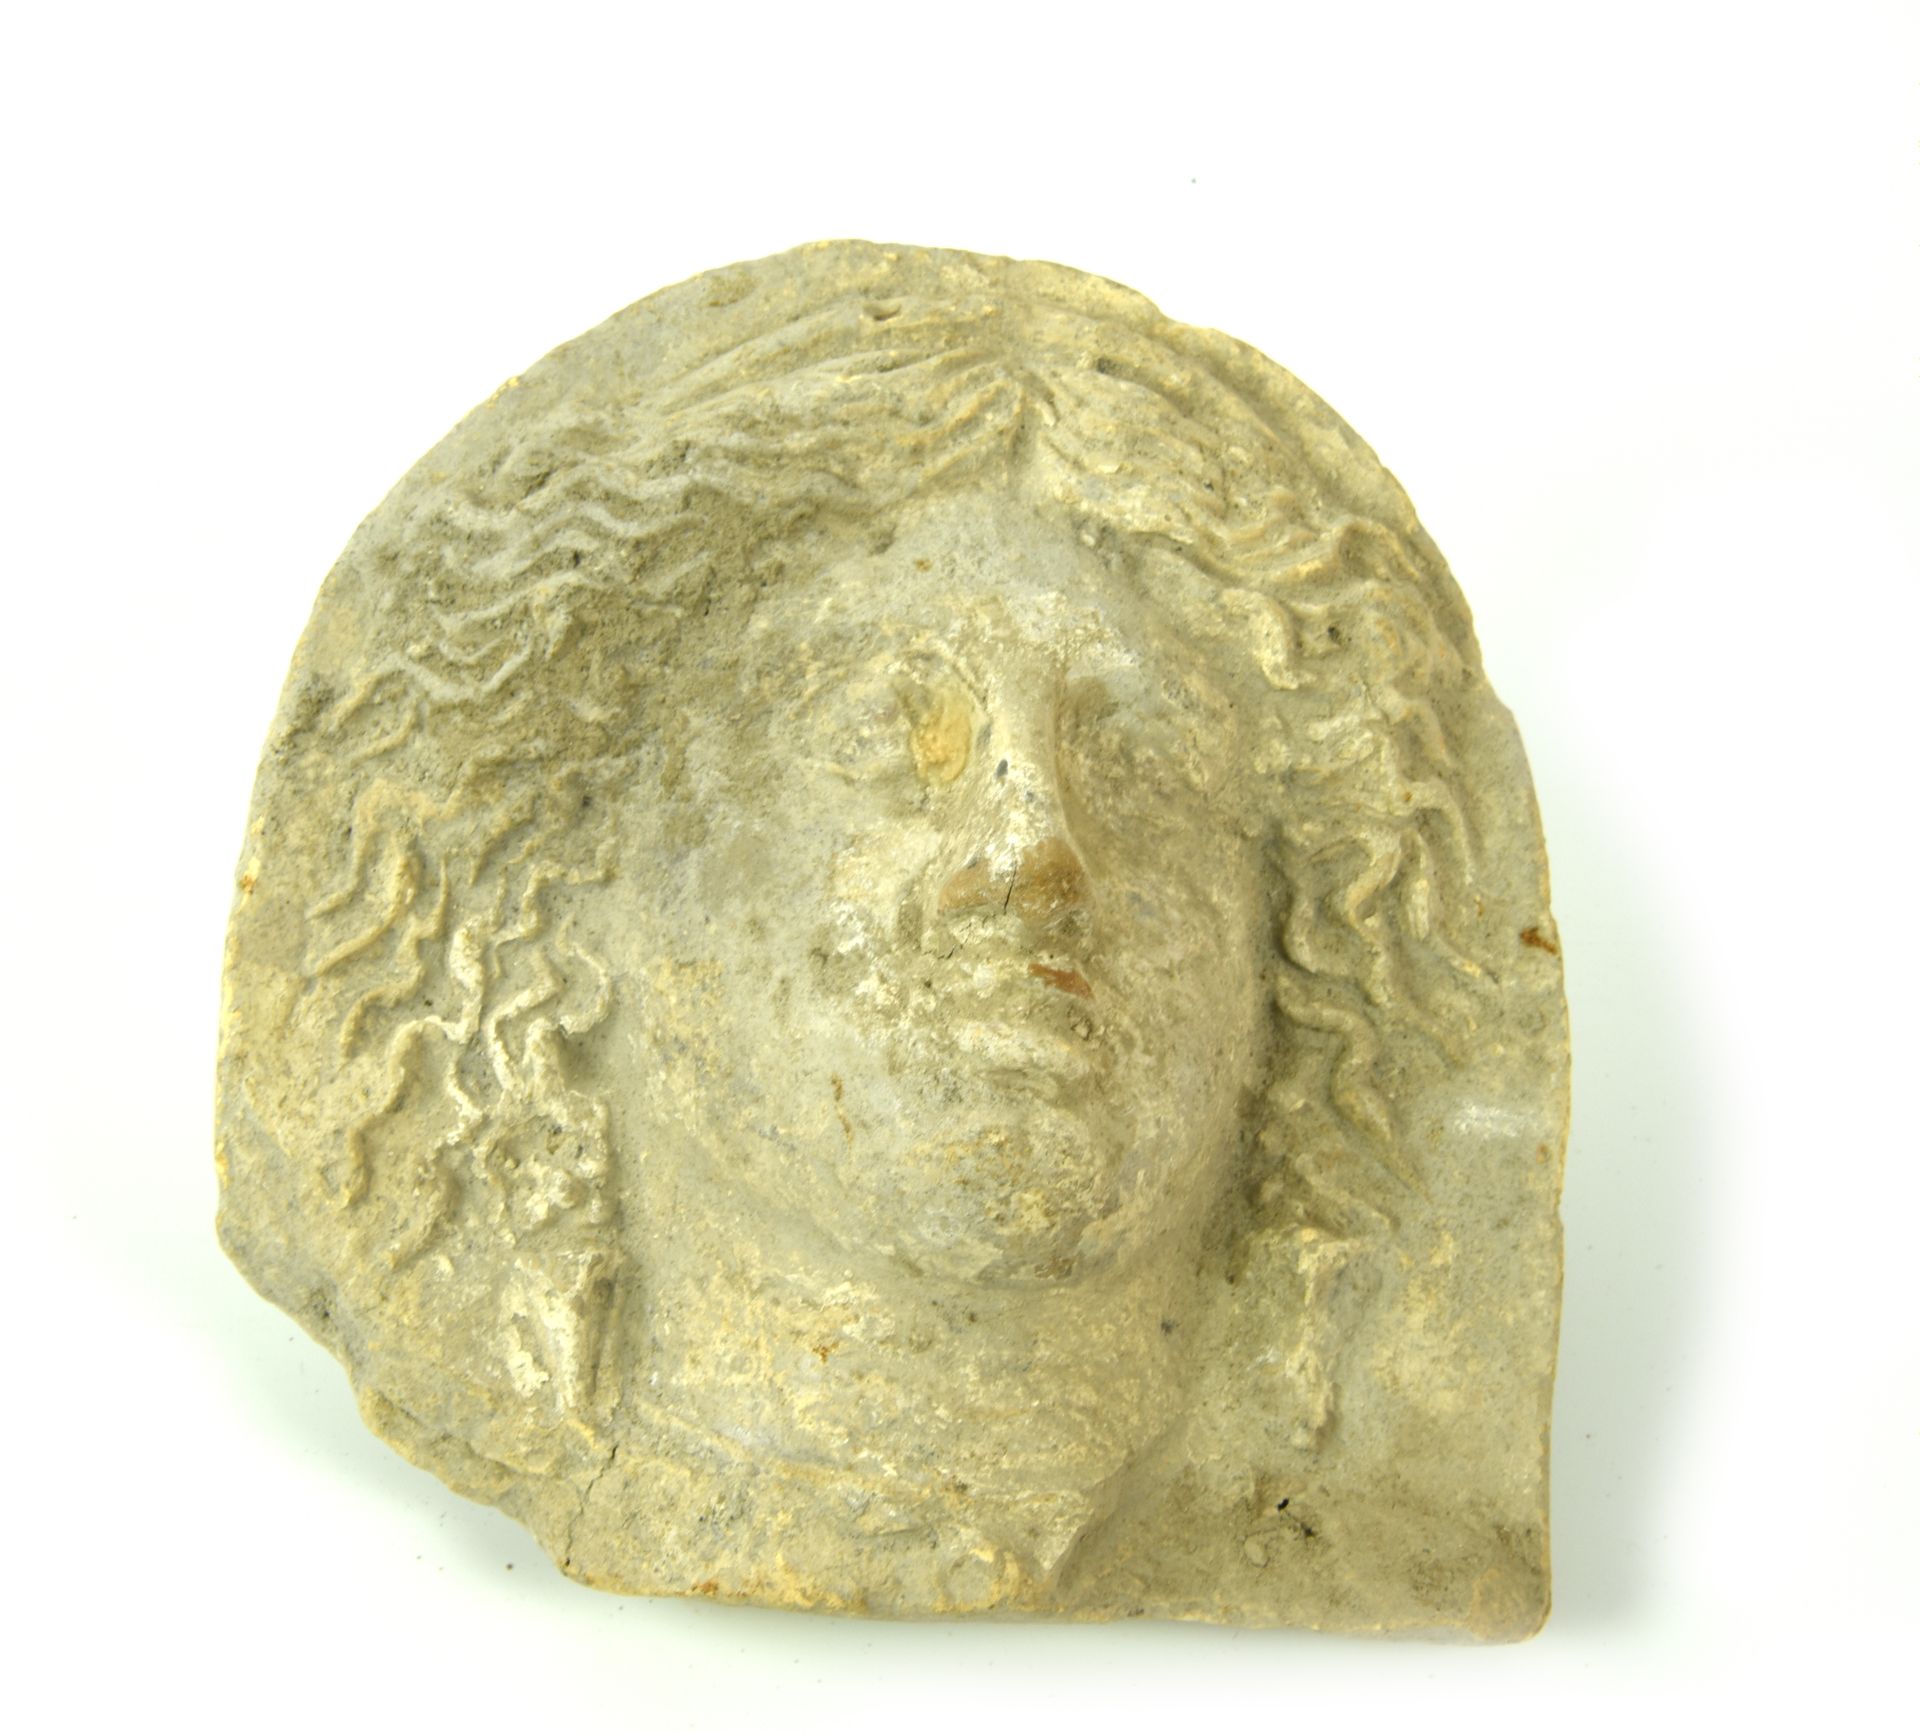 Null 来自塔兰托的Antefix

日期：公元前4世纪。C.

材料和技术：粉红色的纯化粘土，麂皮斑纹，用棍子修饰成型。

拱形前饰，女性半身像面向左侧，浓&hellip;